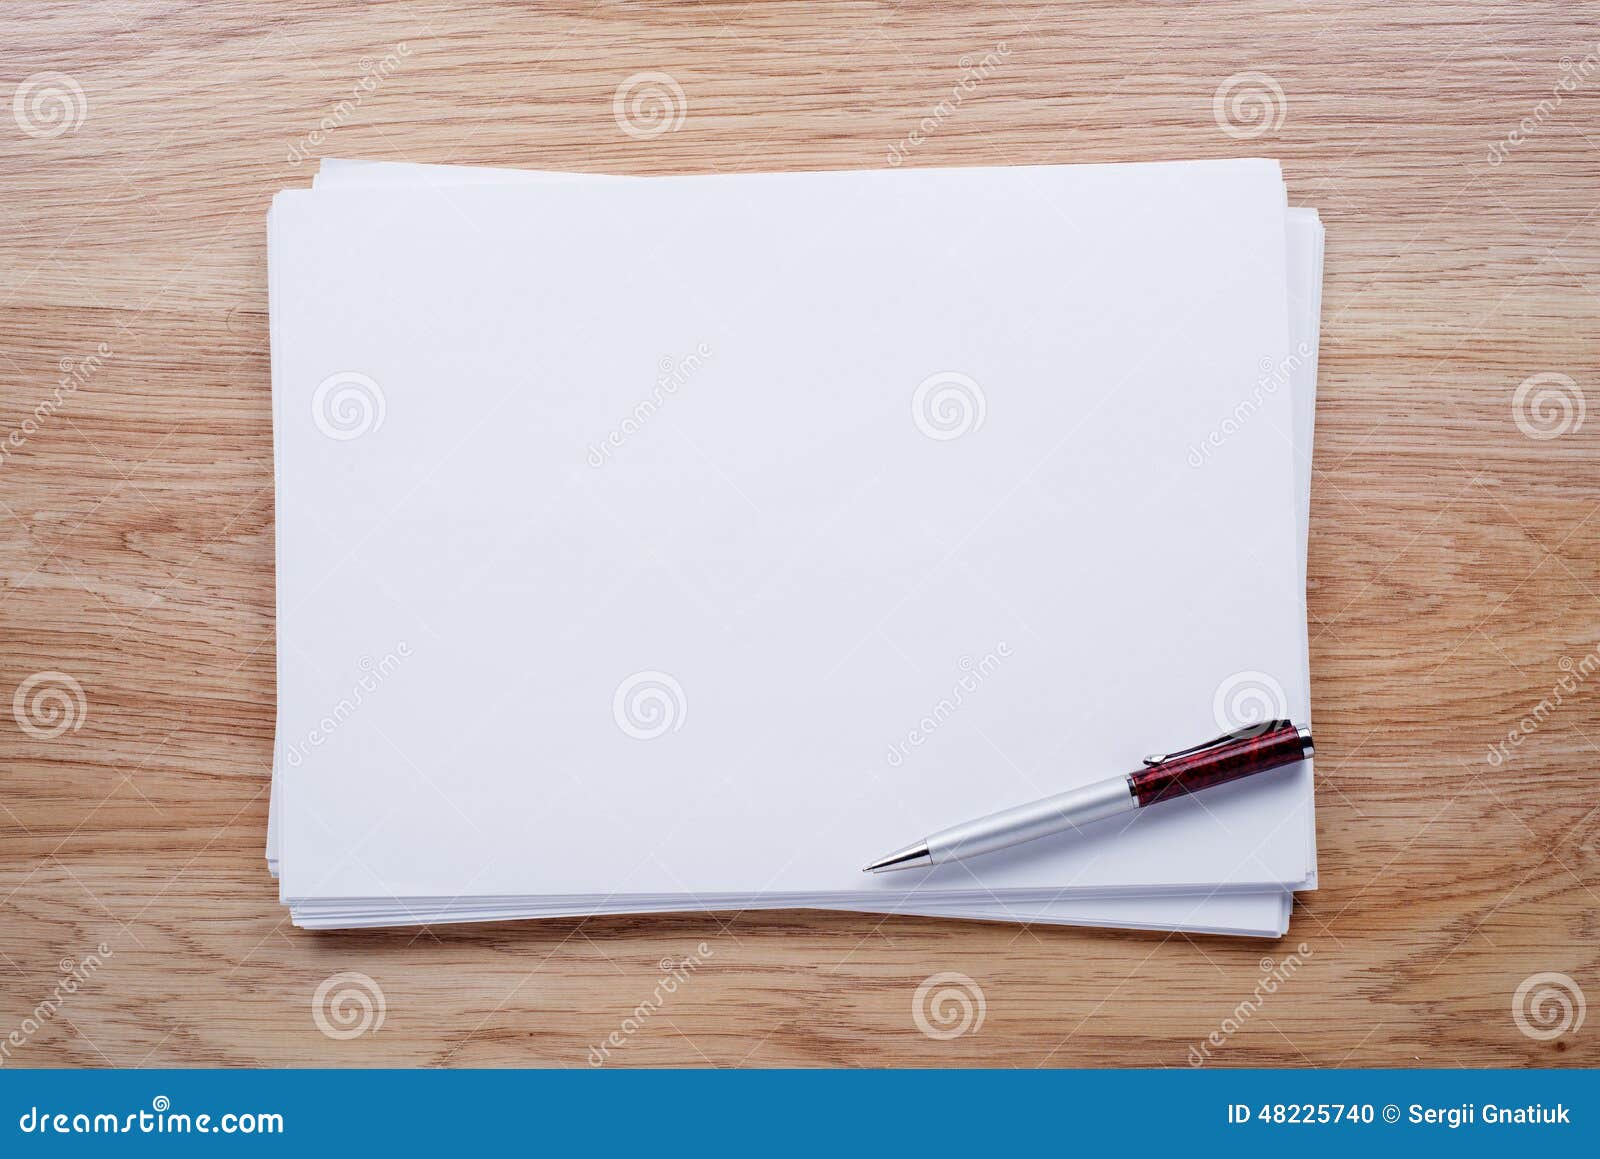 Белый лист бумаги на столе. Лист бумаги на столе. Пустой лист и ручка. Пустой лист на столе. Белый лист бумаги.